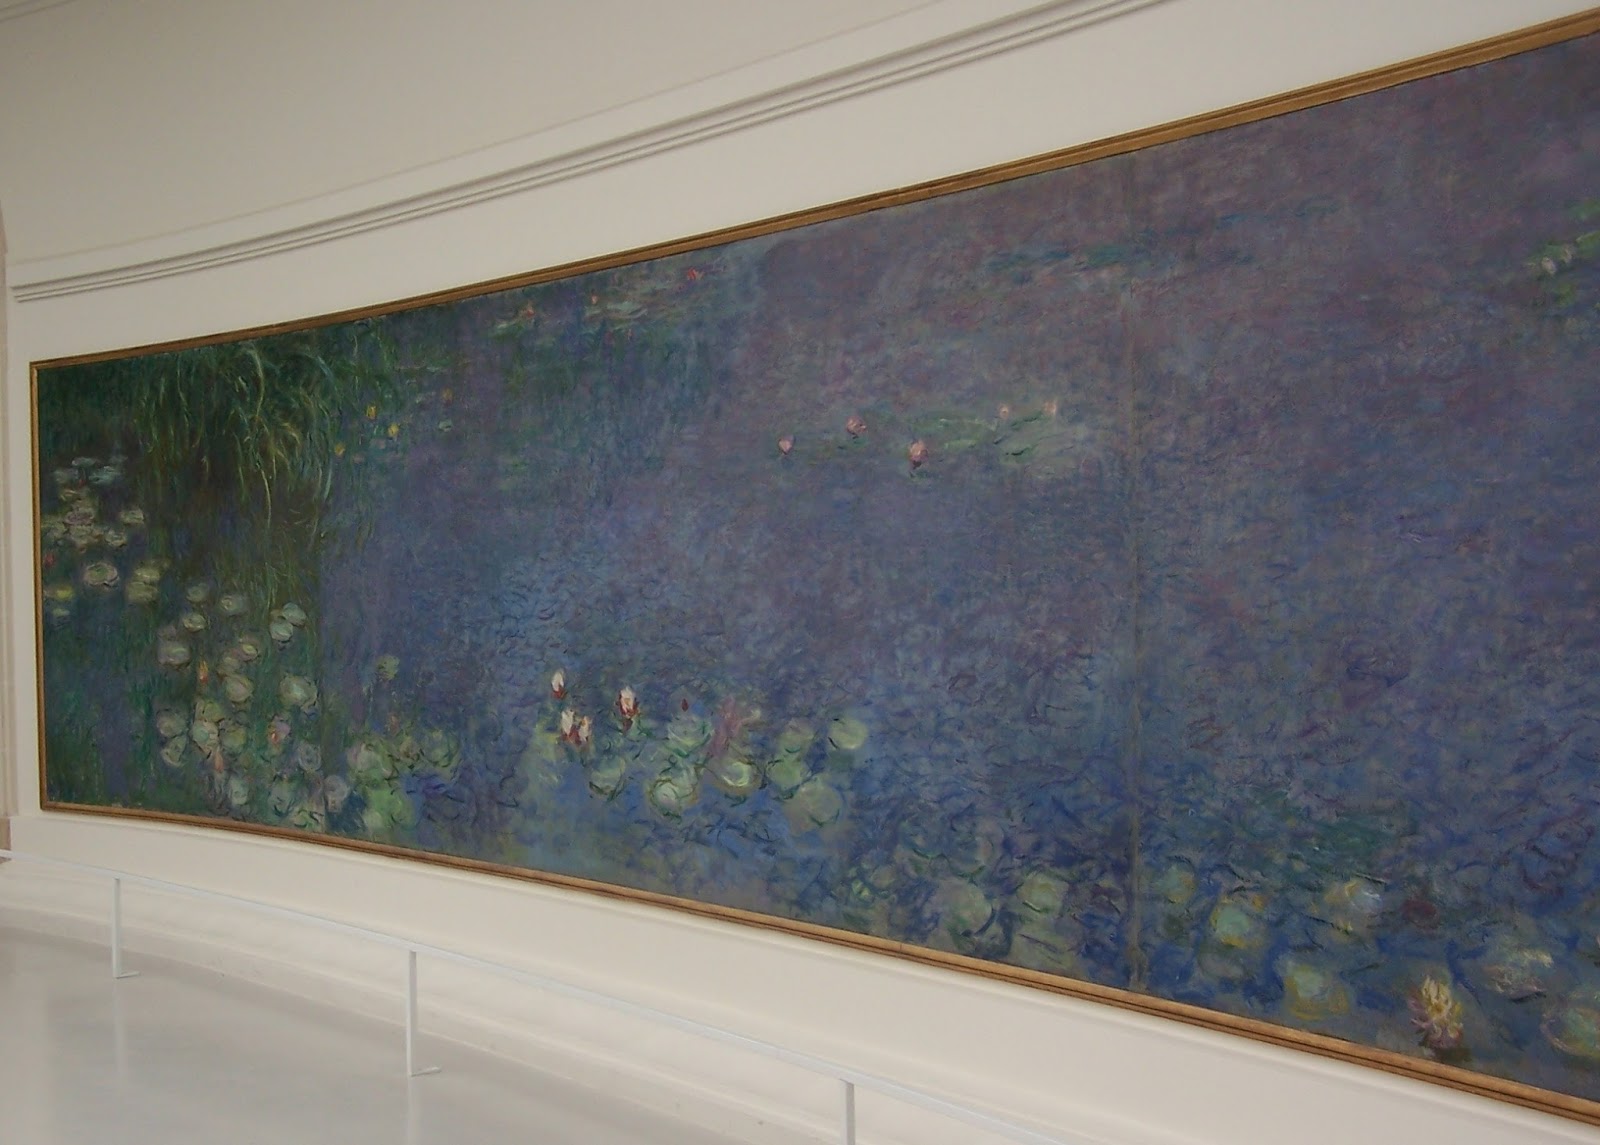 Claude+Monet-1840-1926 (524).jpg